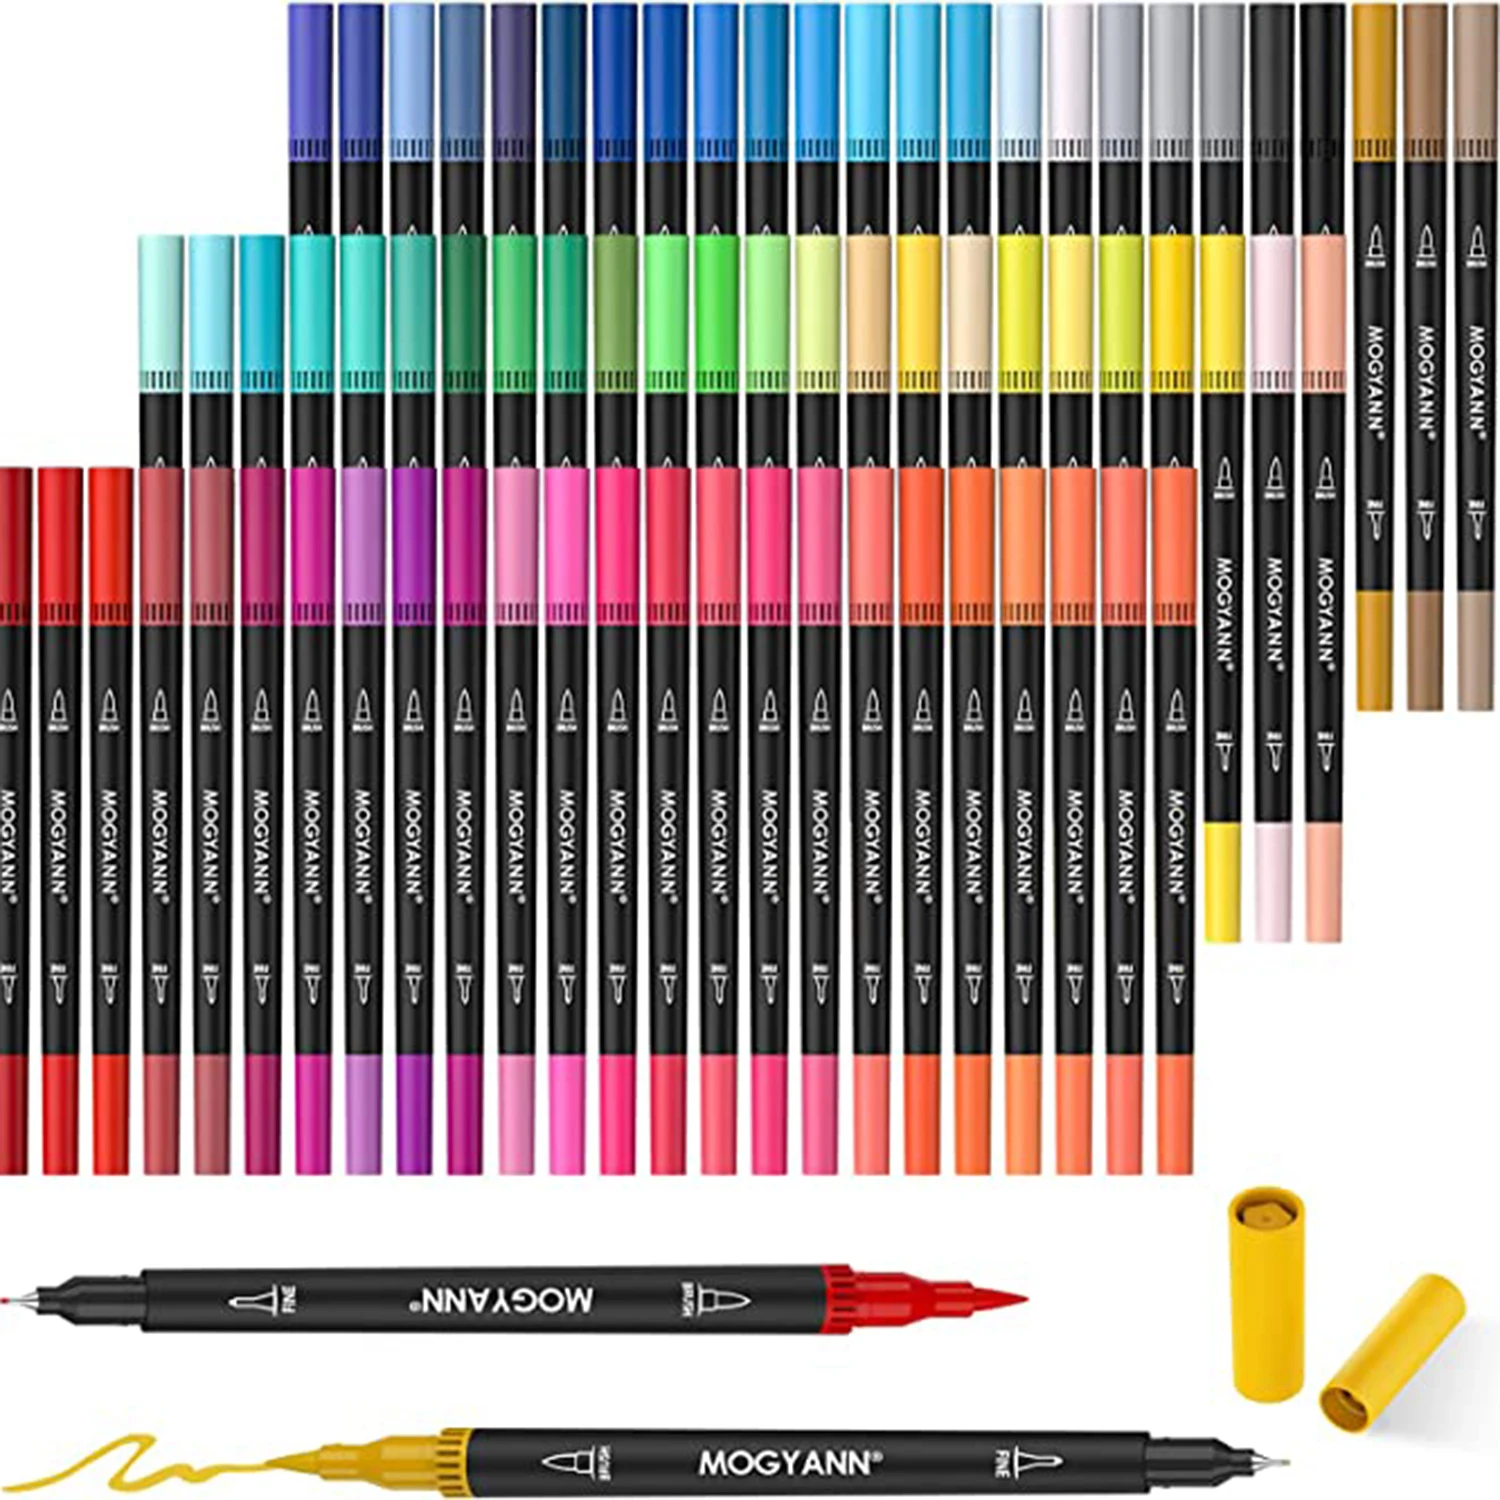 https://ae01.alicdn.com/kf/S7705f1d93e0e4fddad36f6c5af34f72bM/72-Colors-Dual-Tip-Brush-Art-Marker-Pens-Coloring-Markers-Fine-Brush-Tip-Pen-for-Adult.jpg